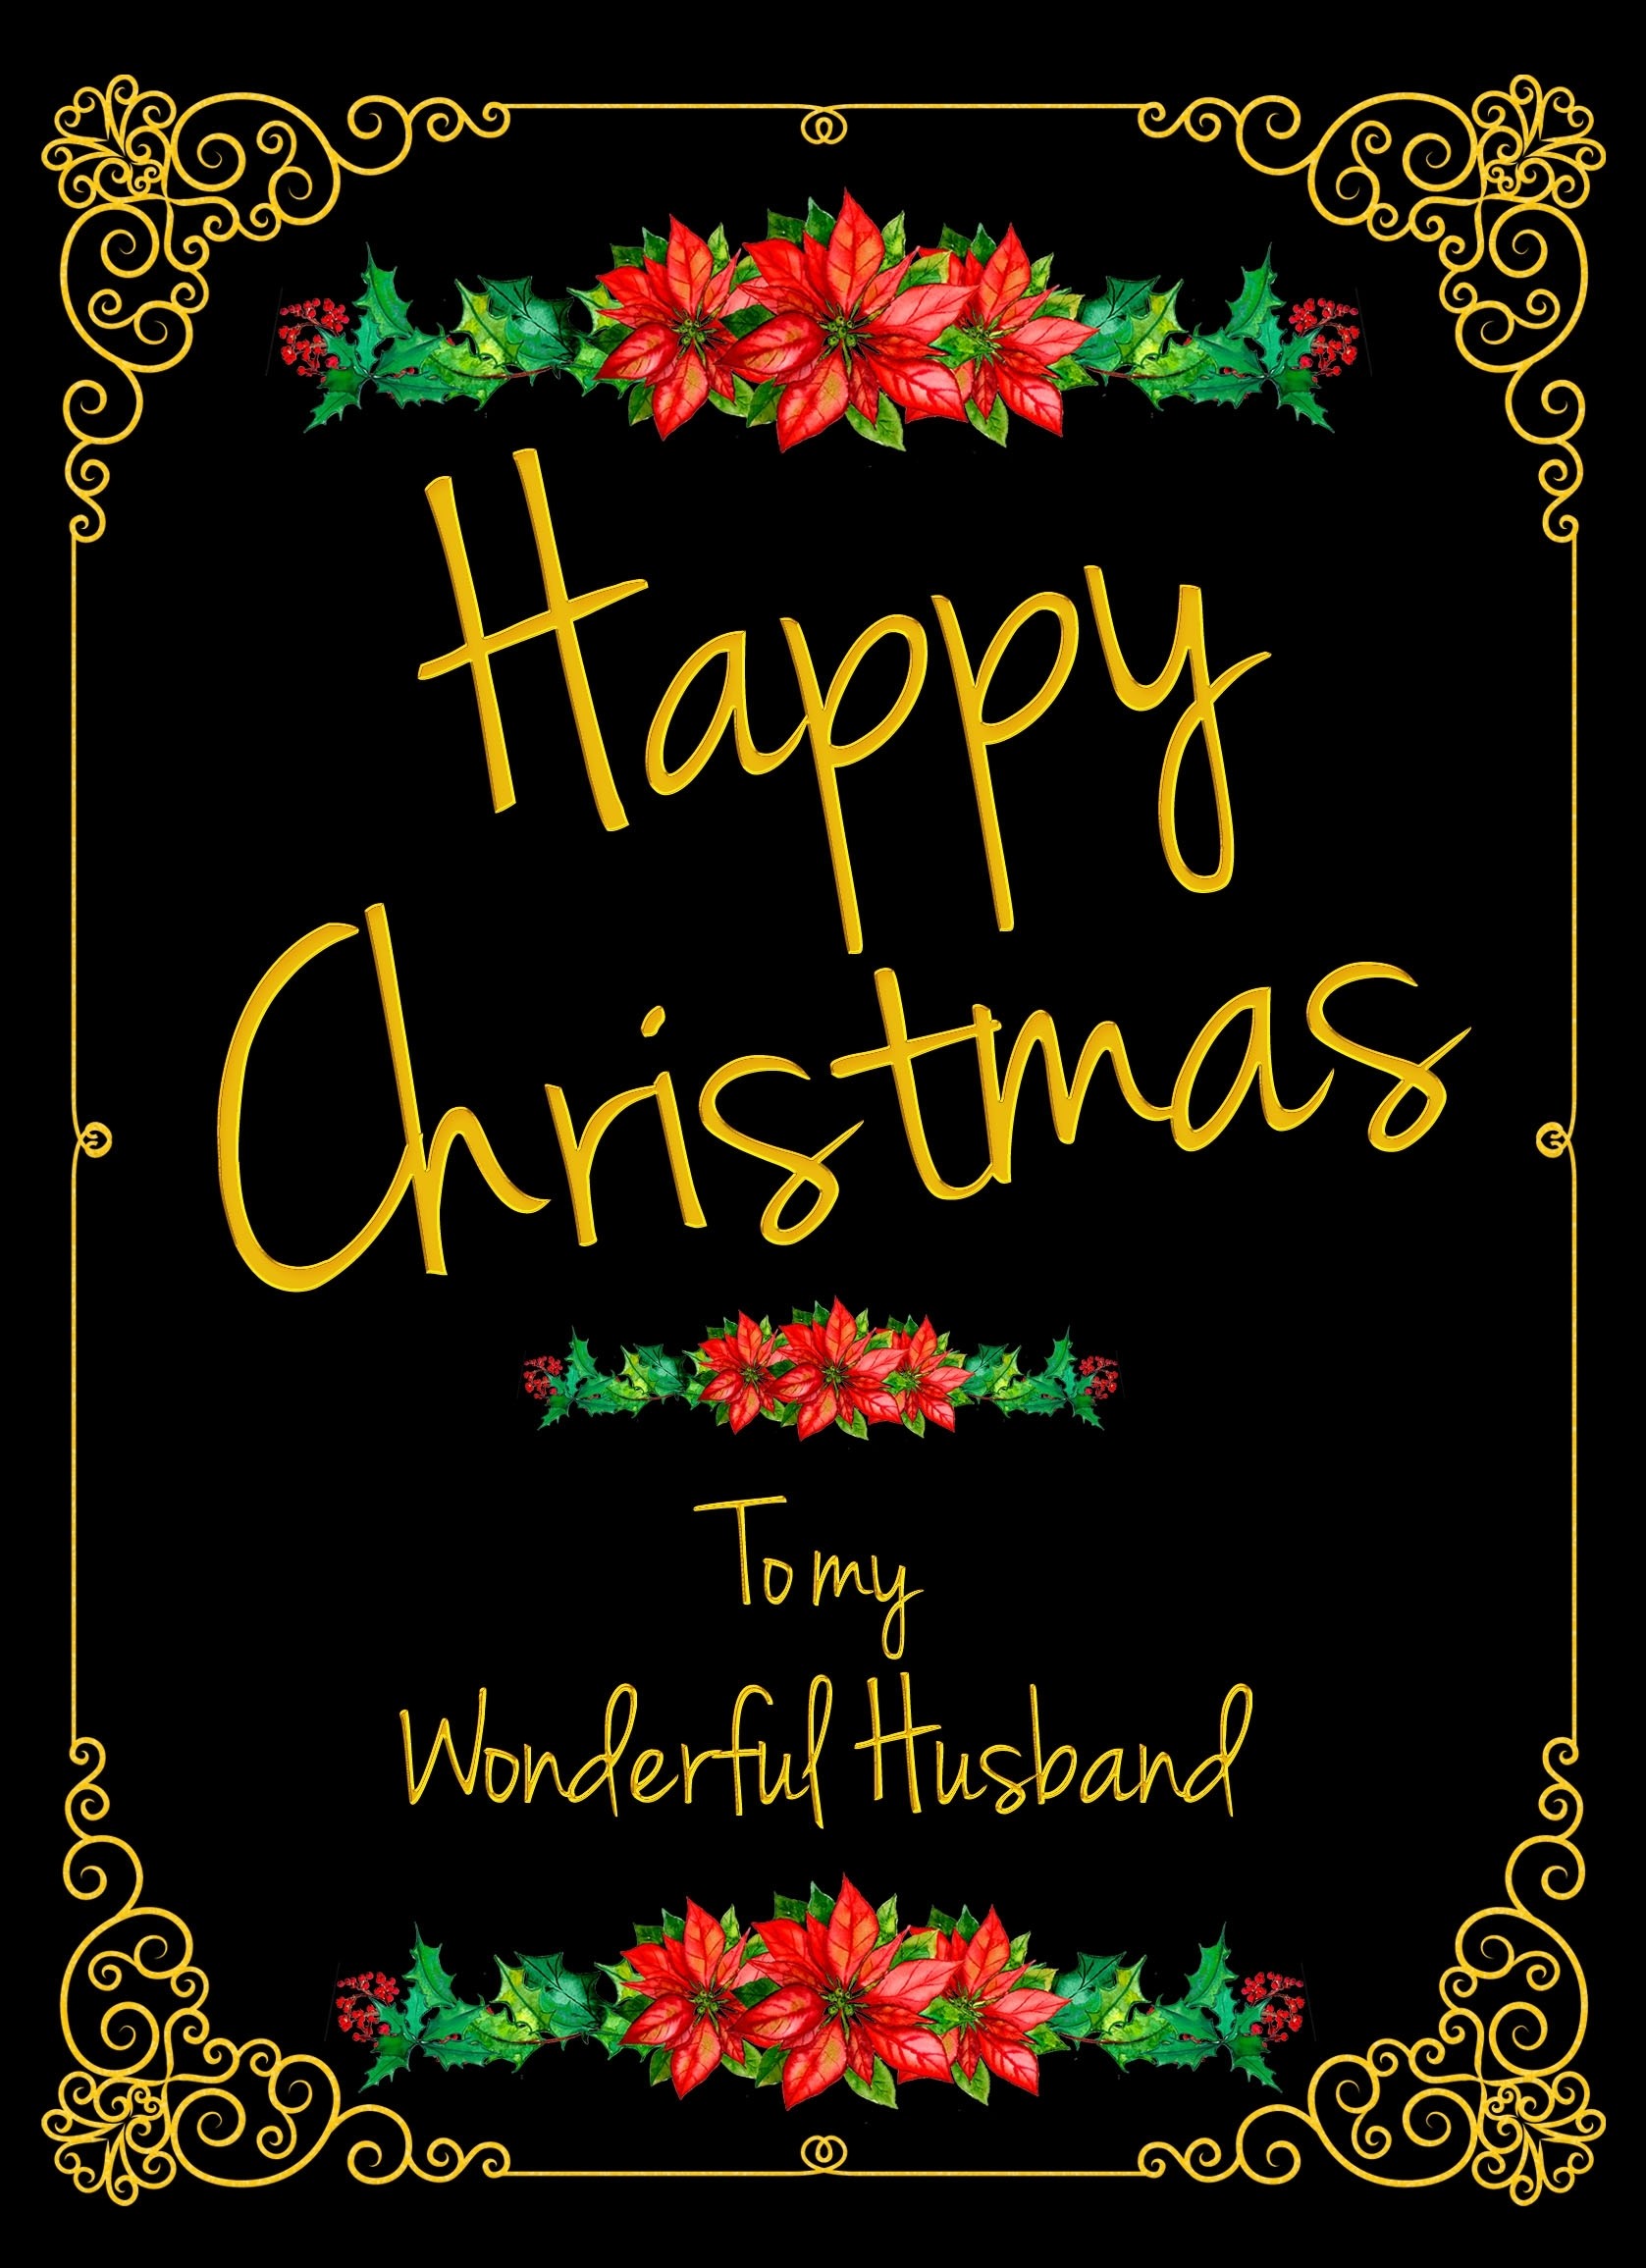 Christmas Card For Husband (Wonderful)